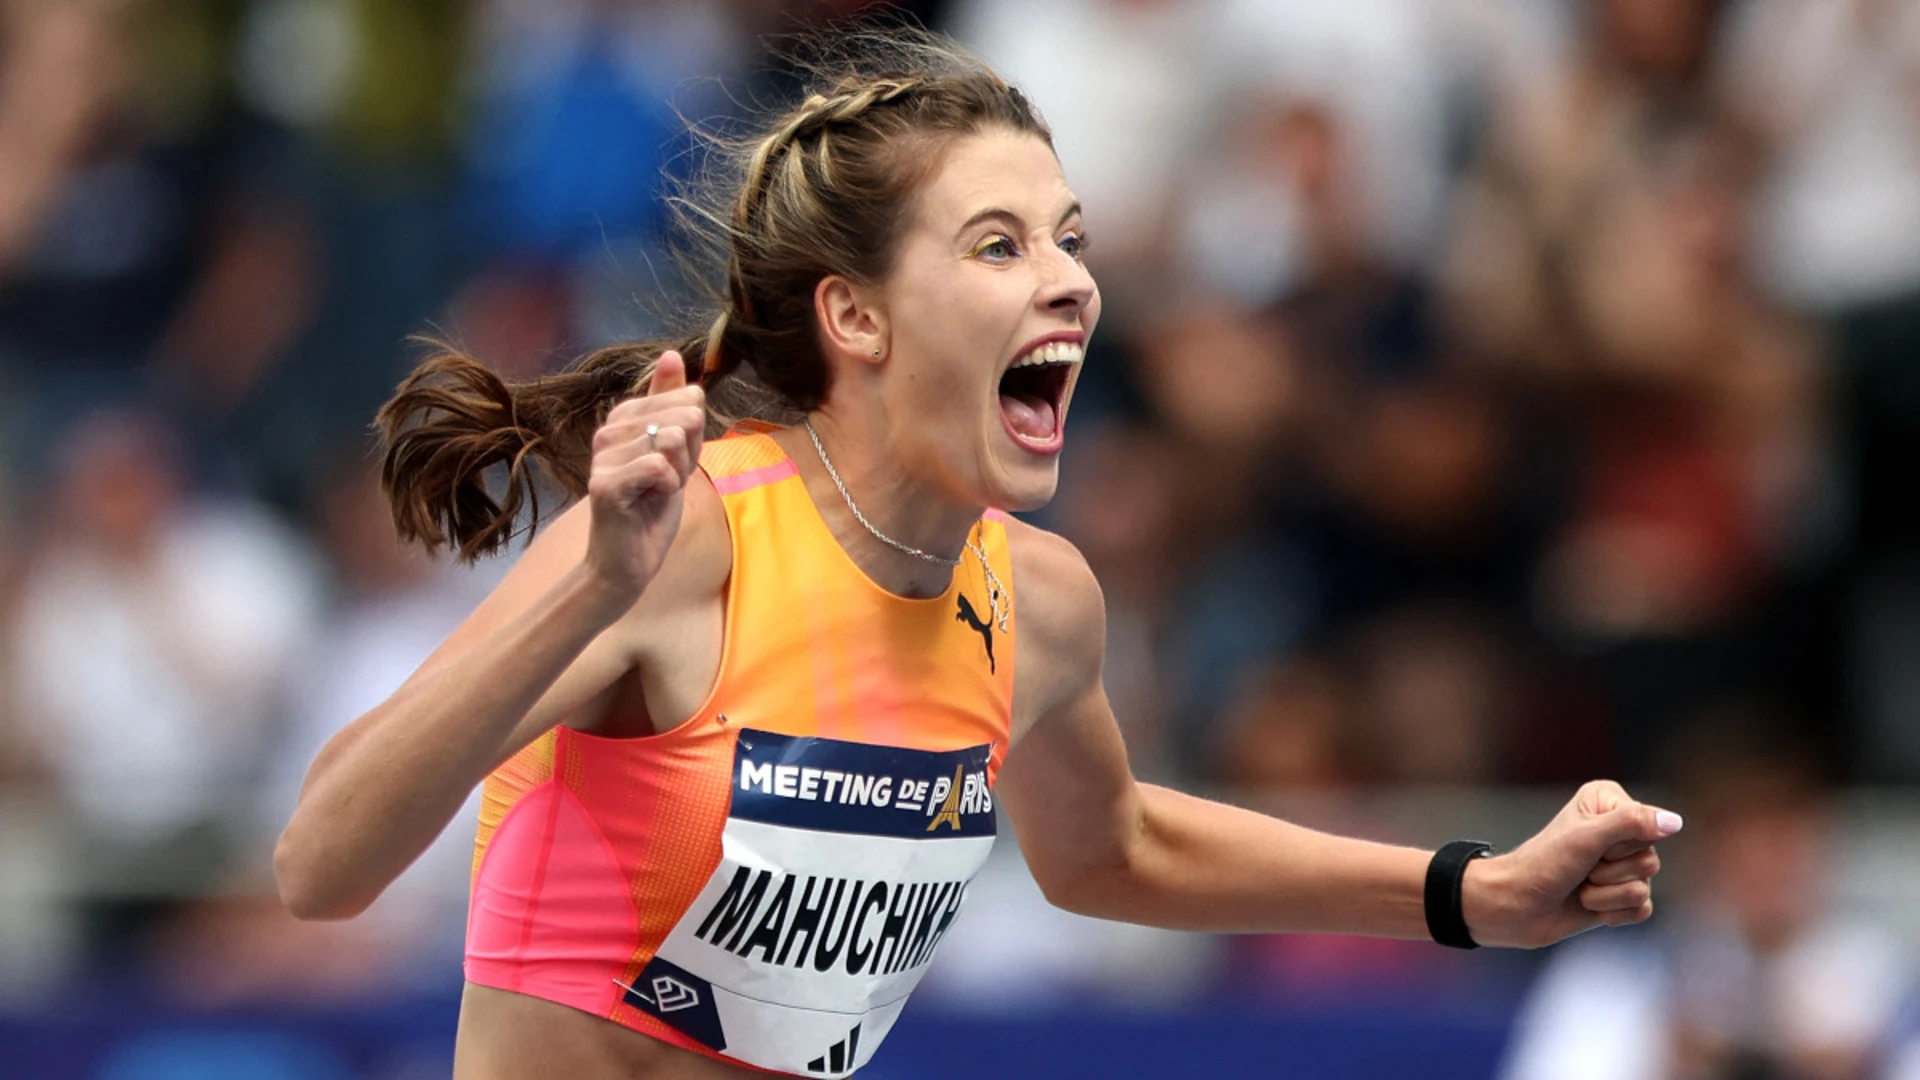 Ukraine's Mahuchikh sets new world women's high jump record